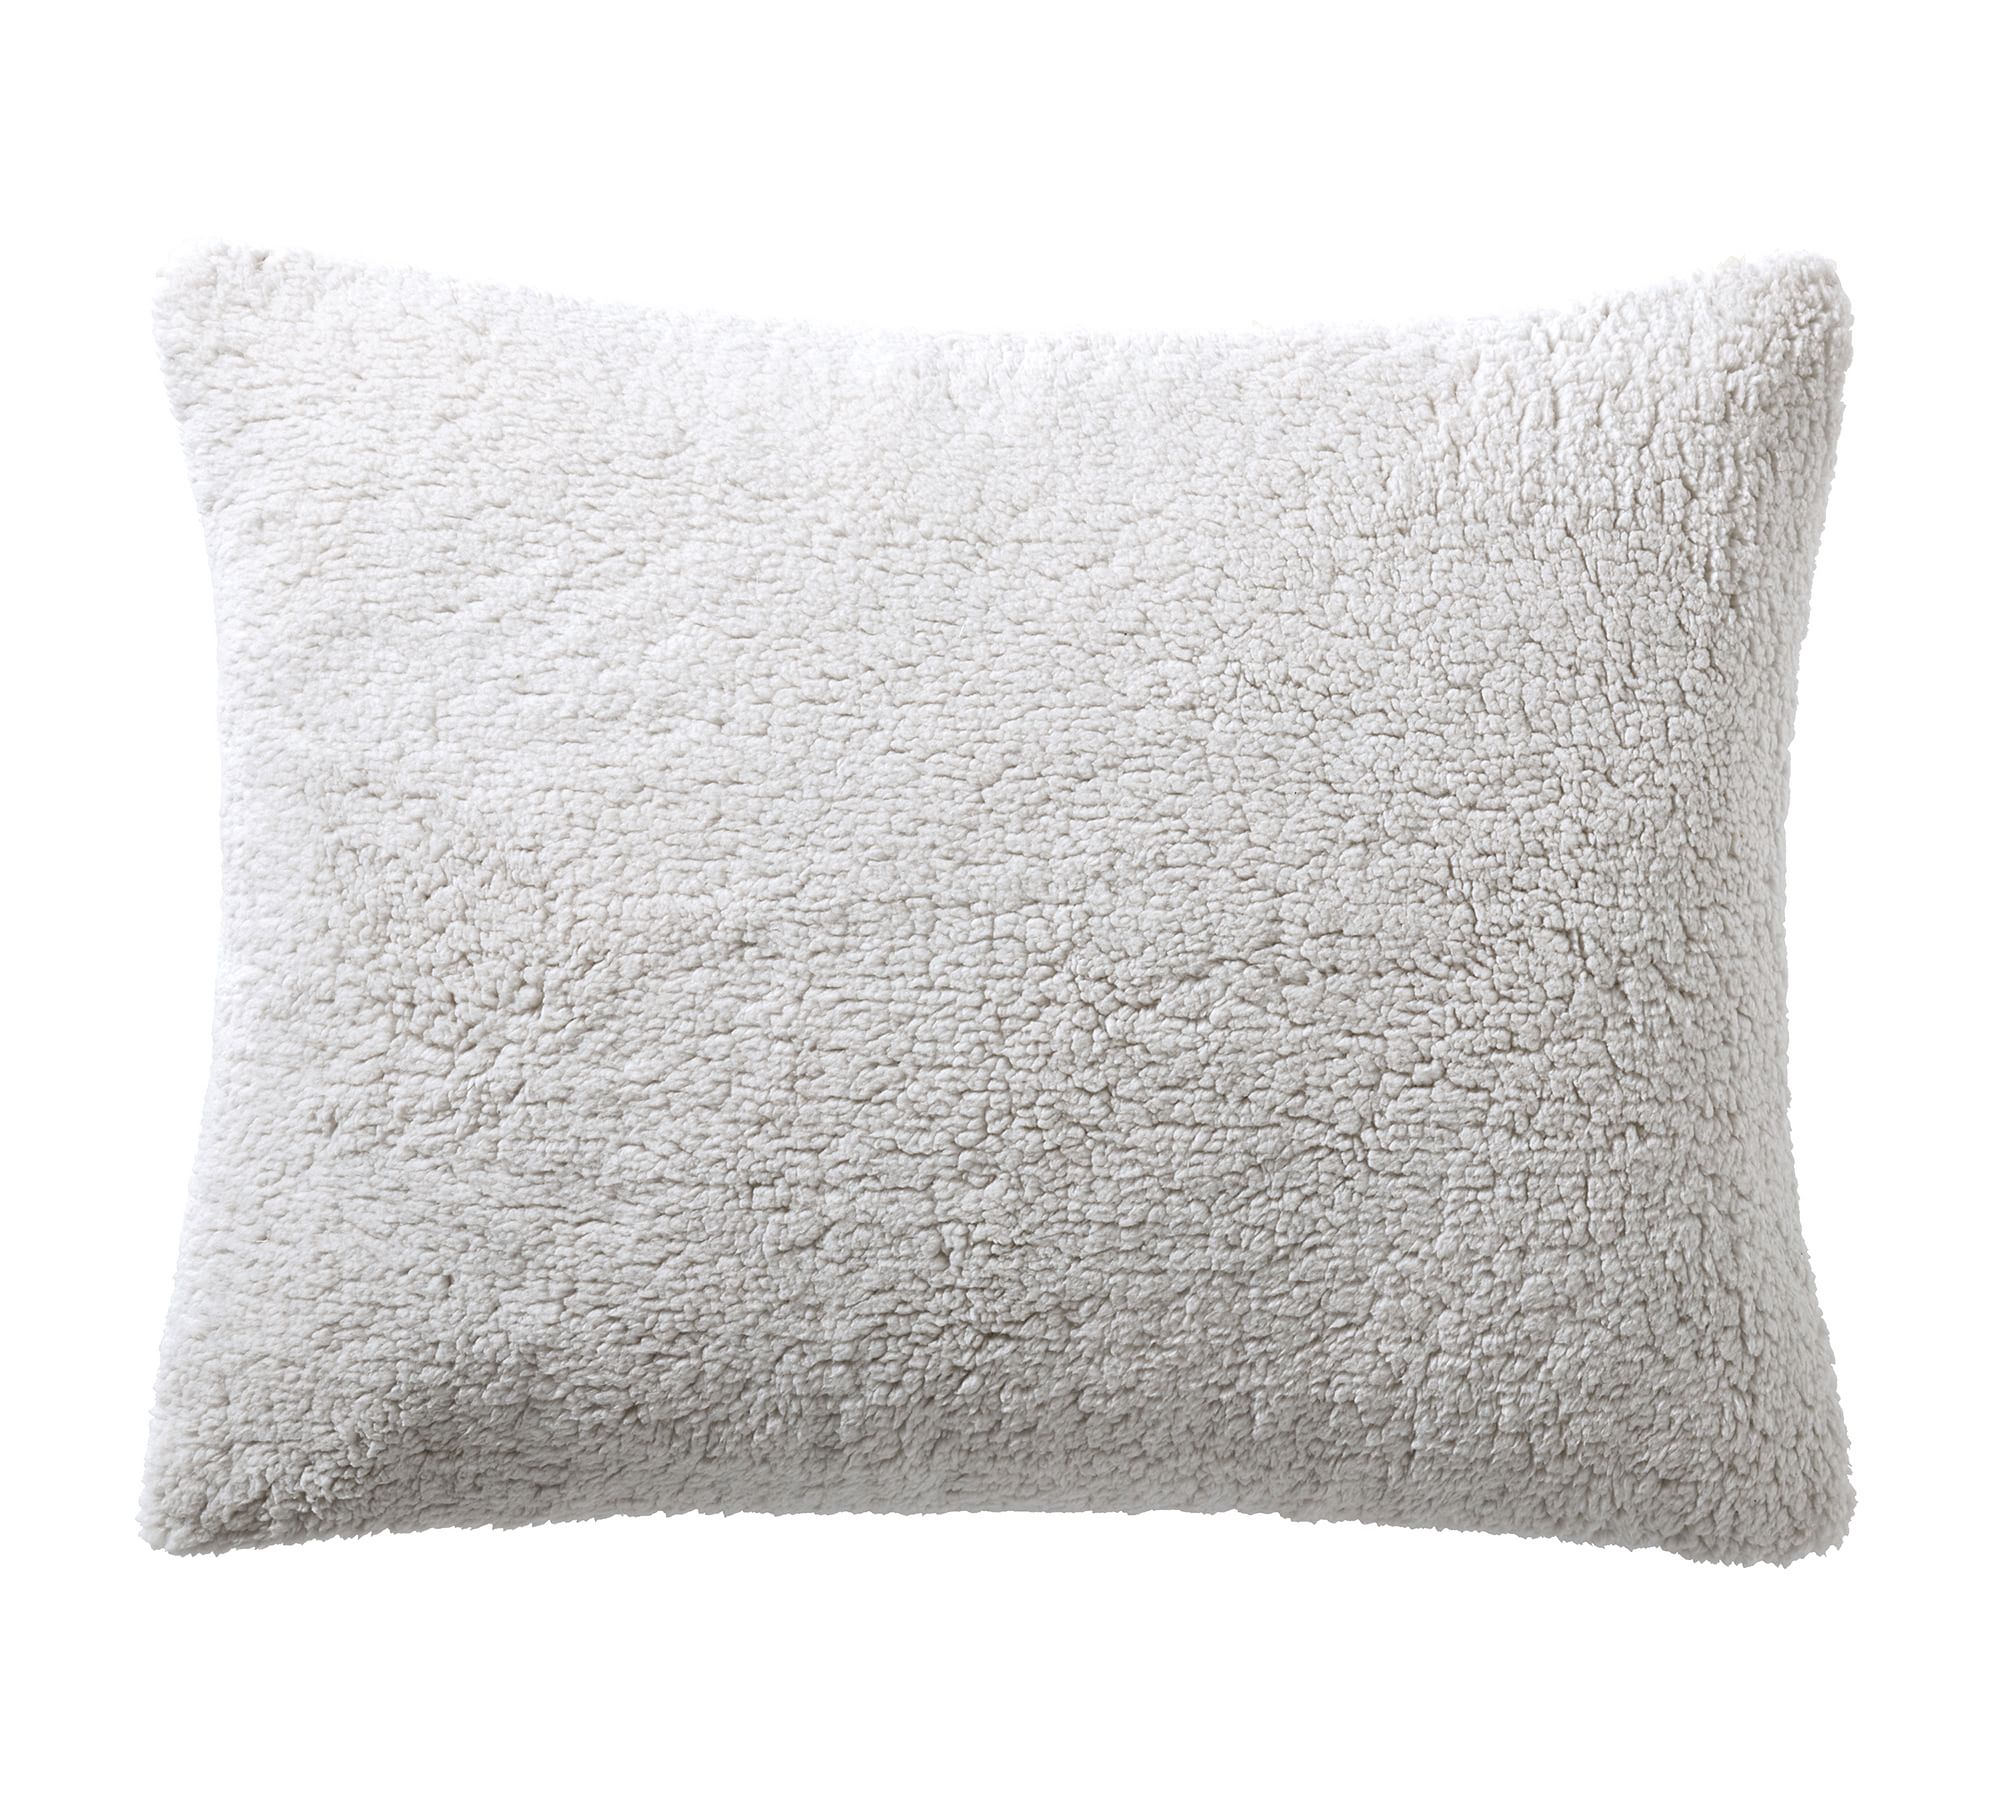 Marshmallow Comforter Sham